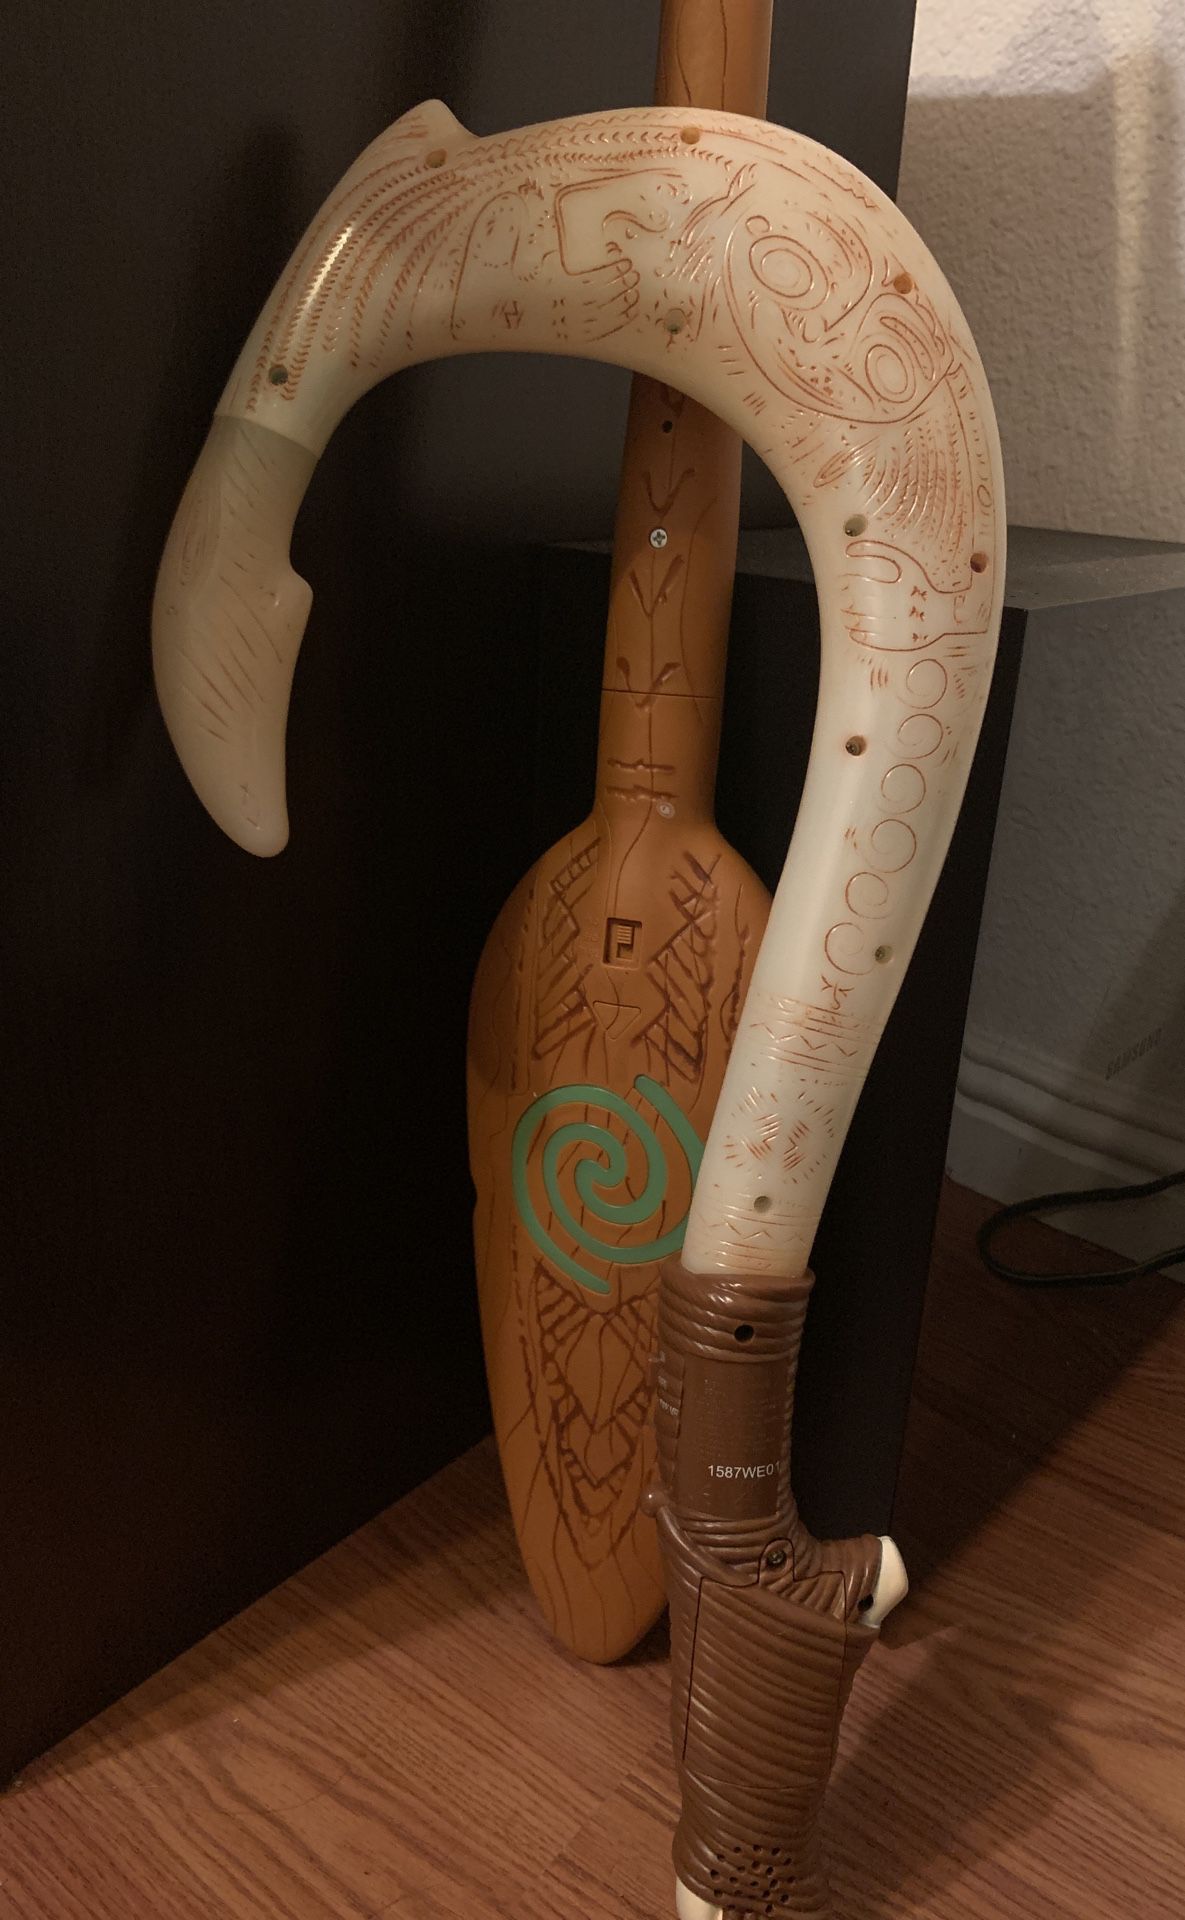 Moana toys(Maui's hook) (Moana's oar) both for 15 dollars. Both in